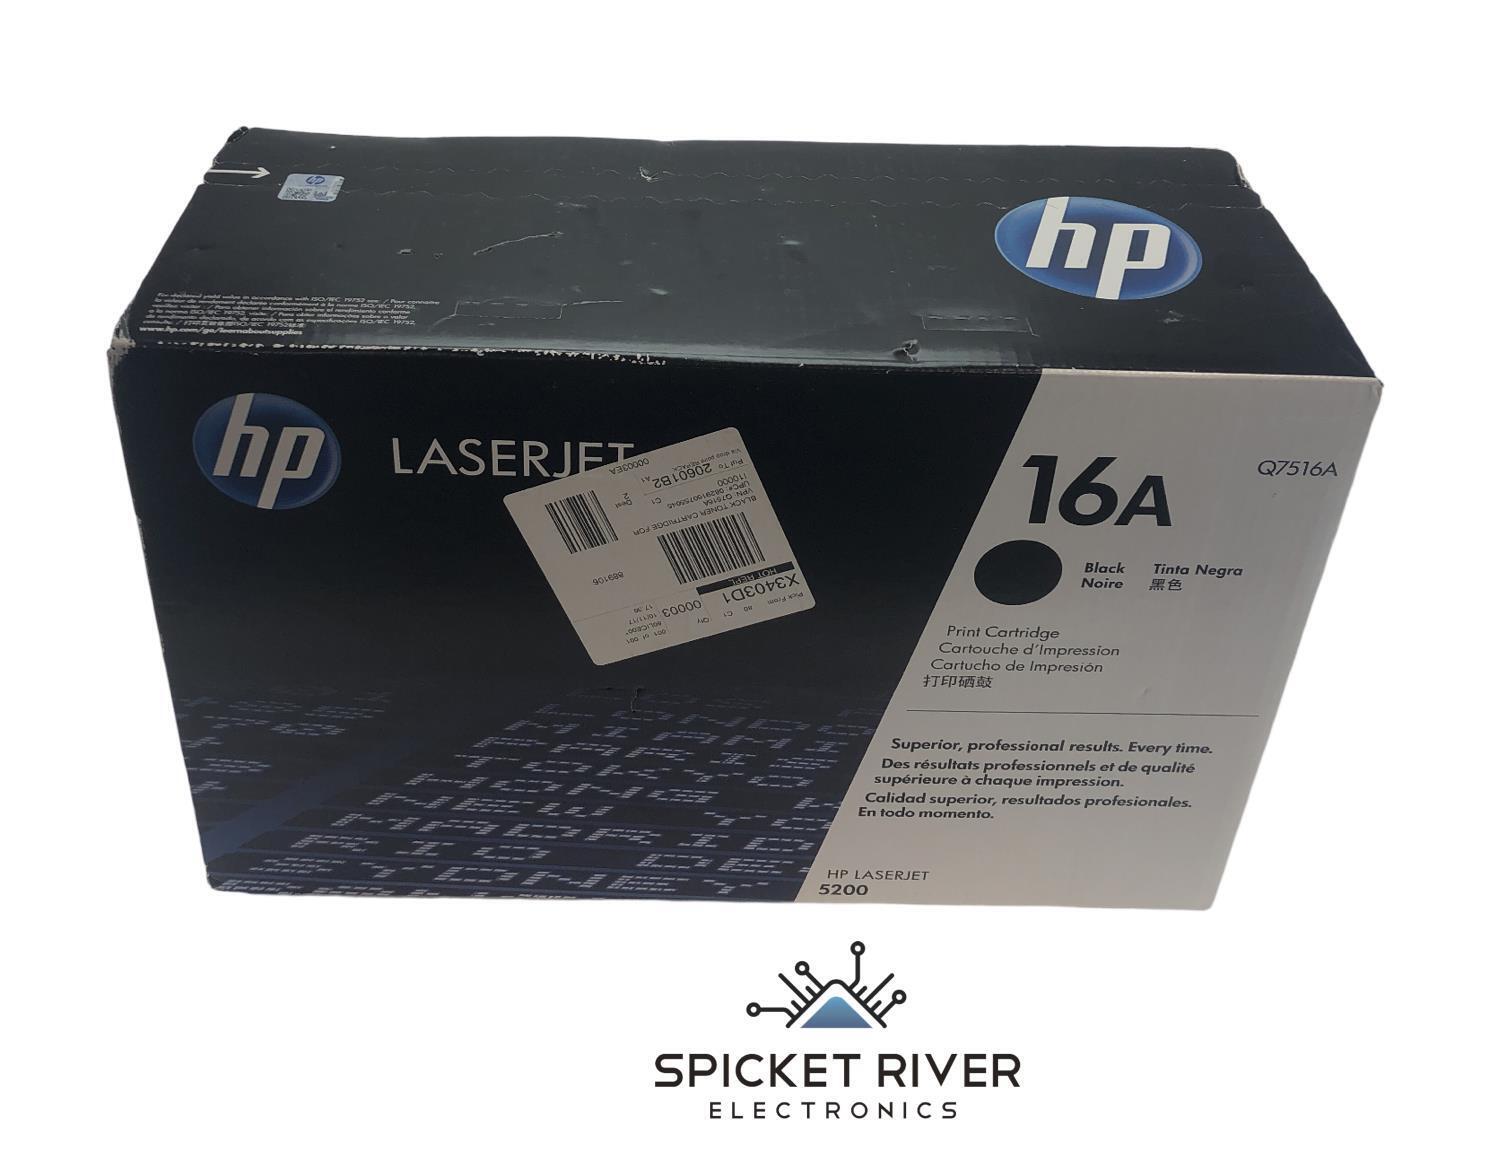 NEW - Open Box - HP Q7516A 16A LaserJet 5200 Black Printer Toner Cartridge